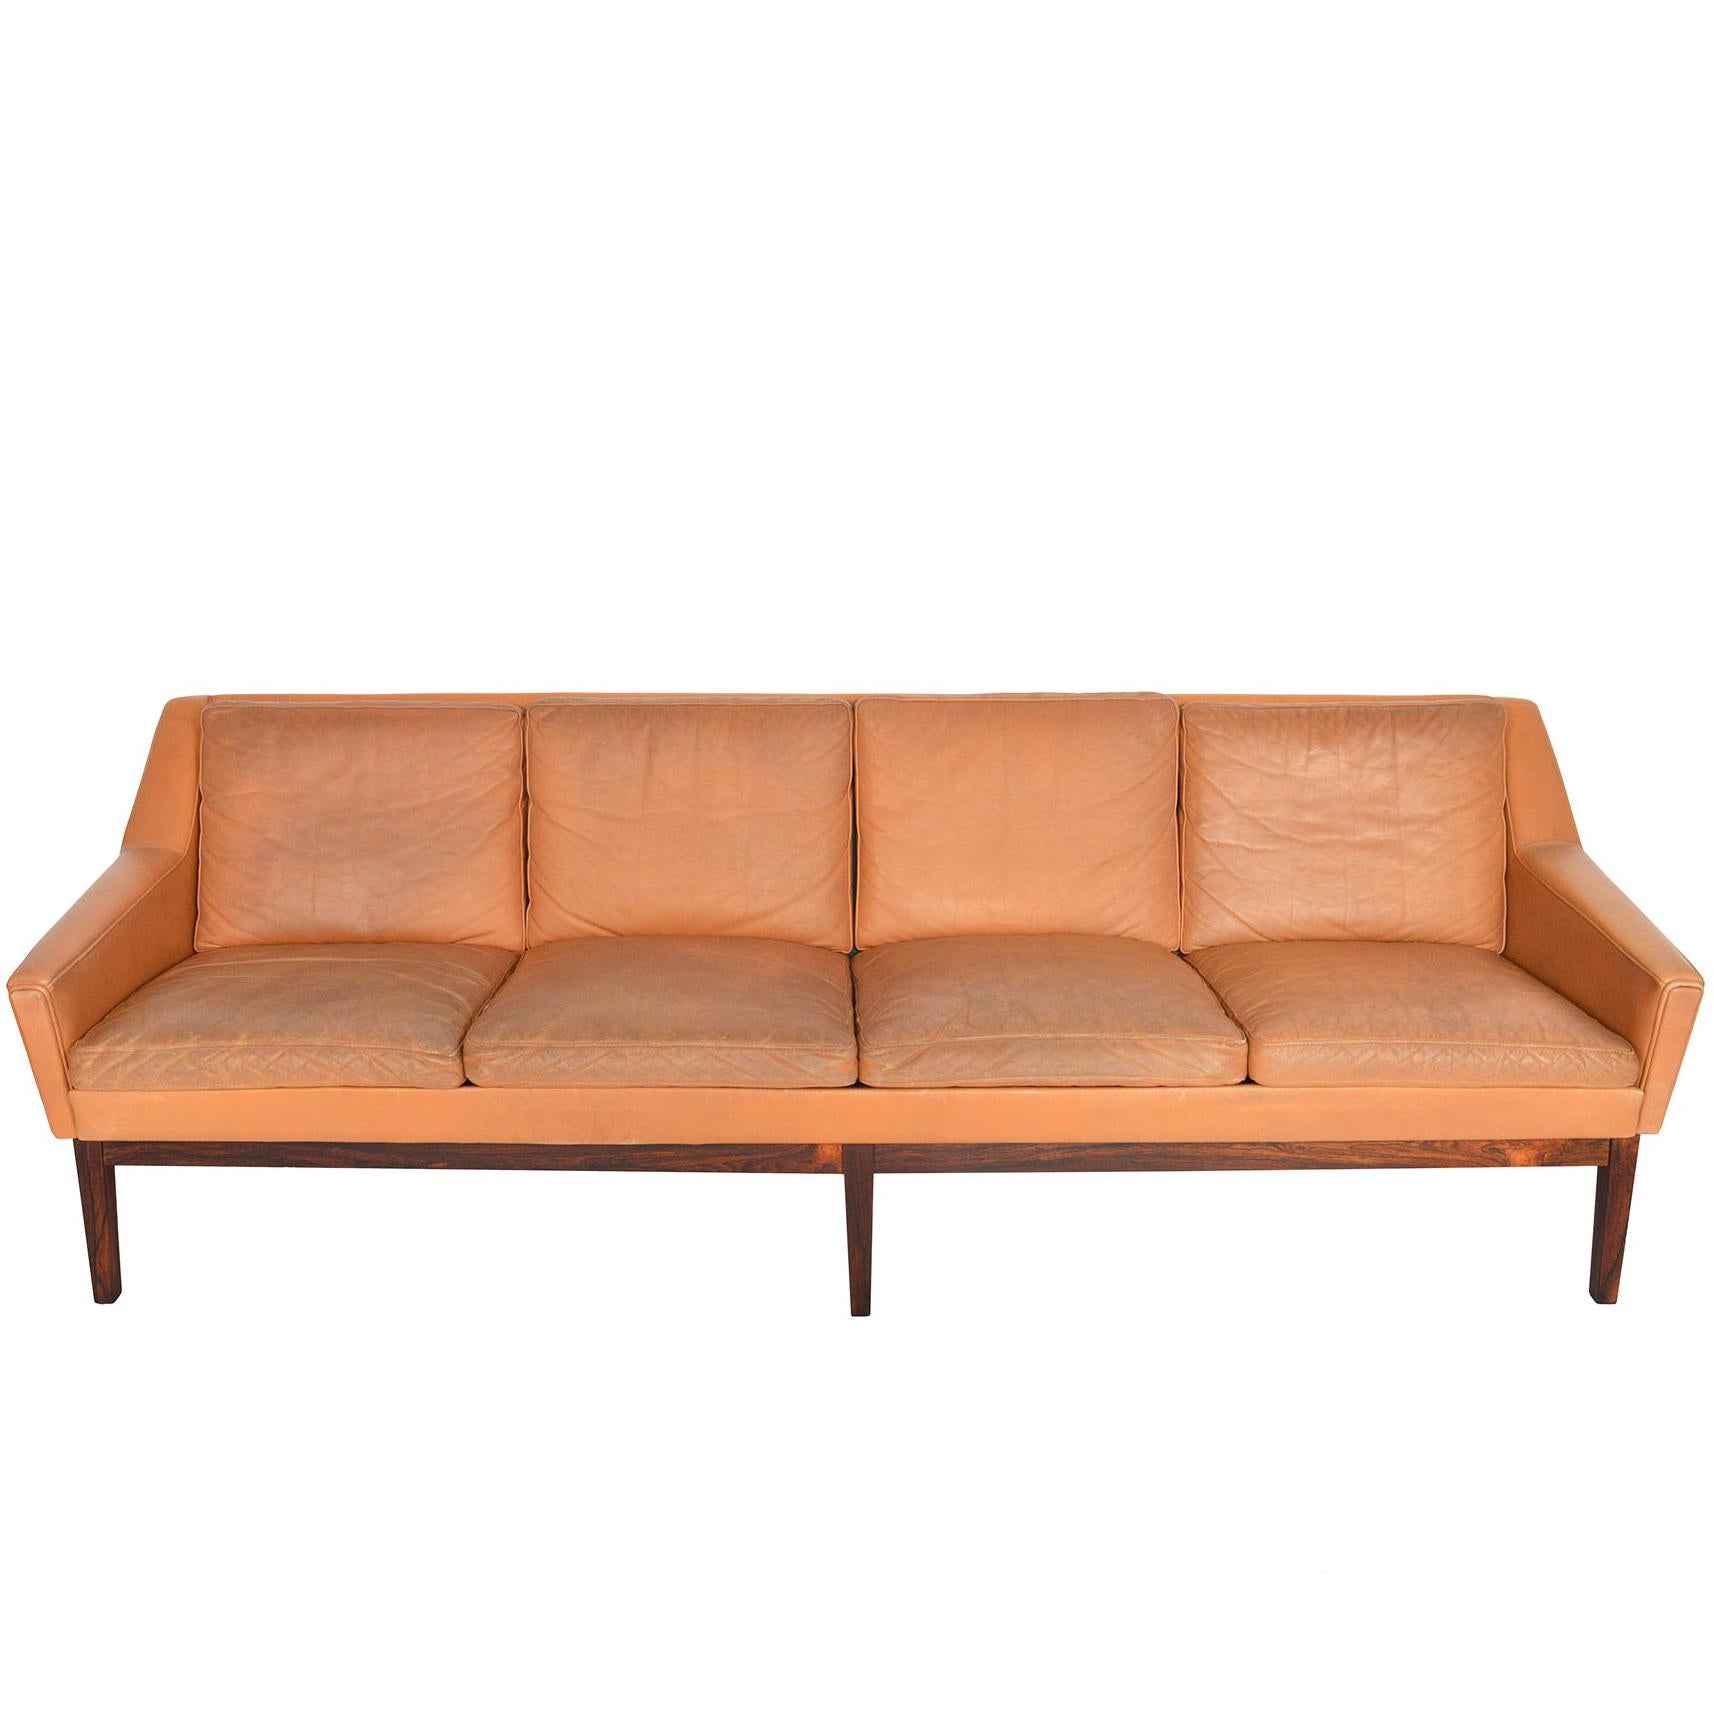 Danish Modern Four-Seat Sepia Leather Sofa